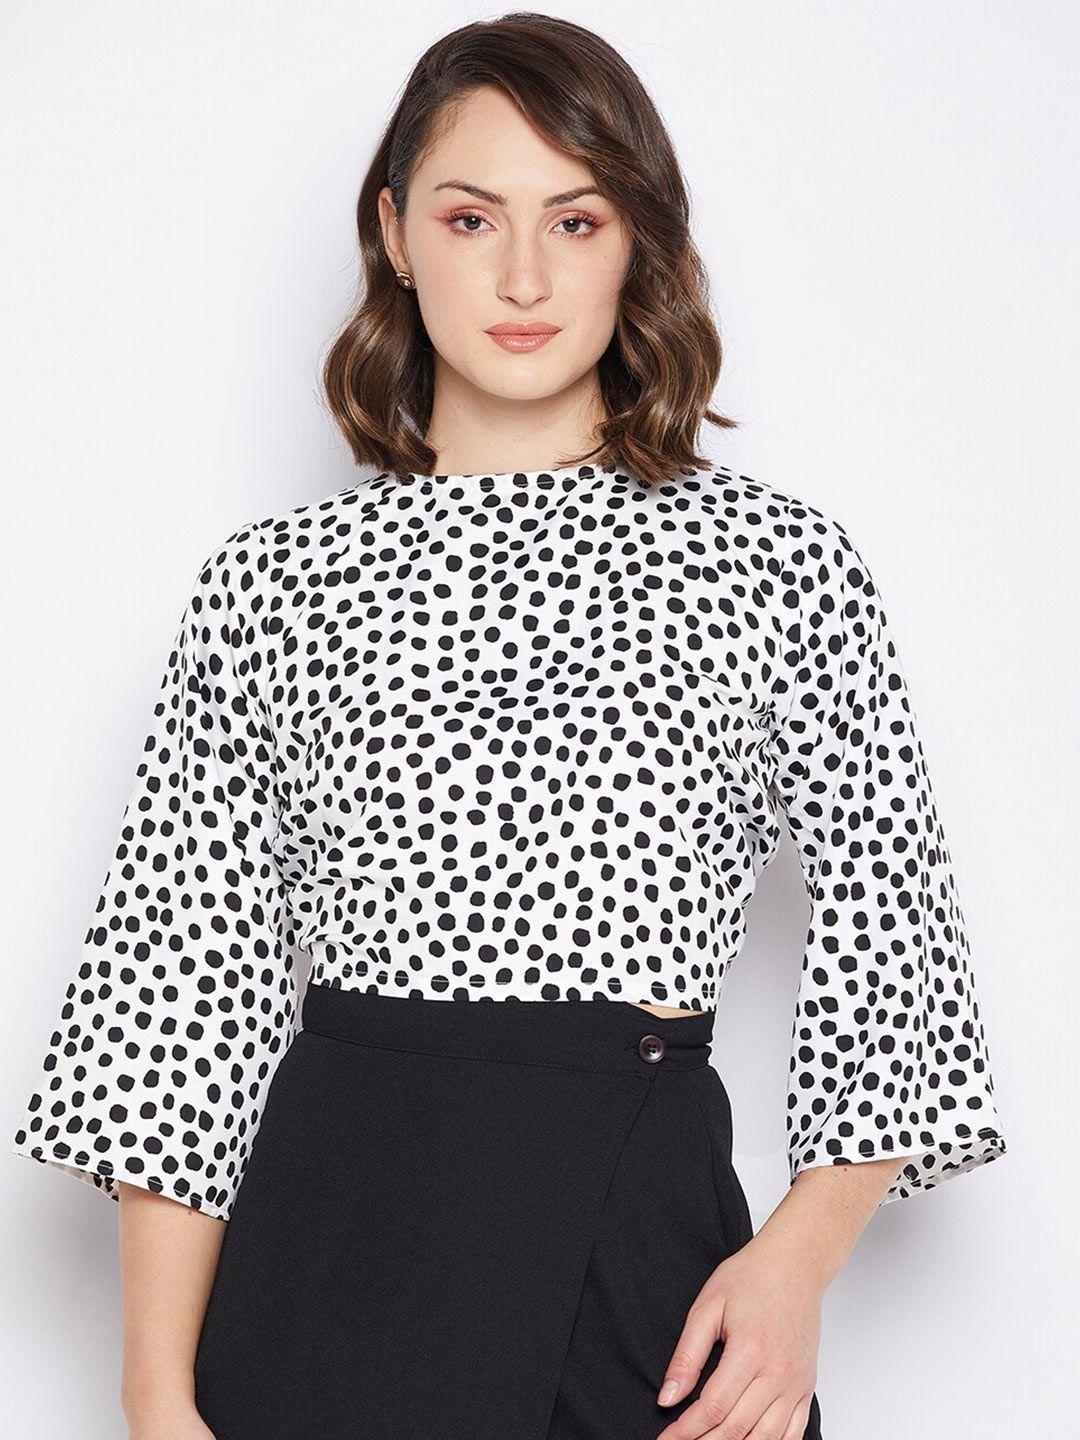 fashfun polka dots printed flared sleeve styled back top